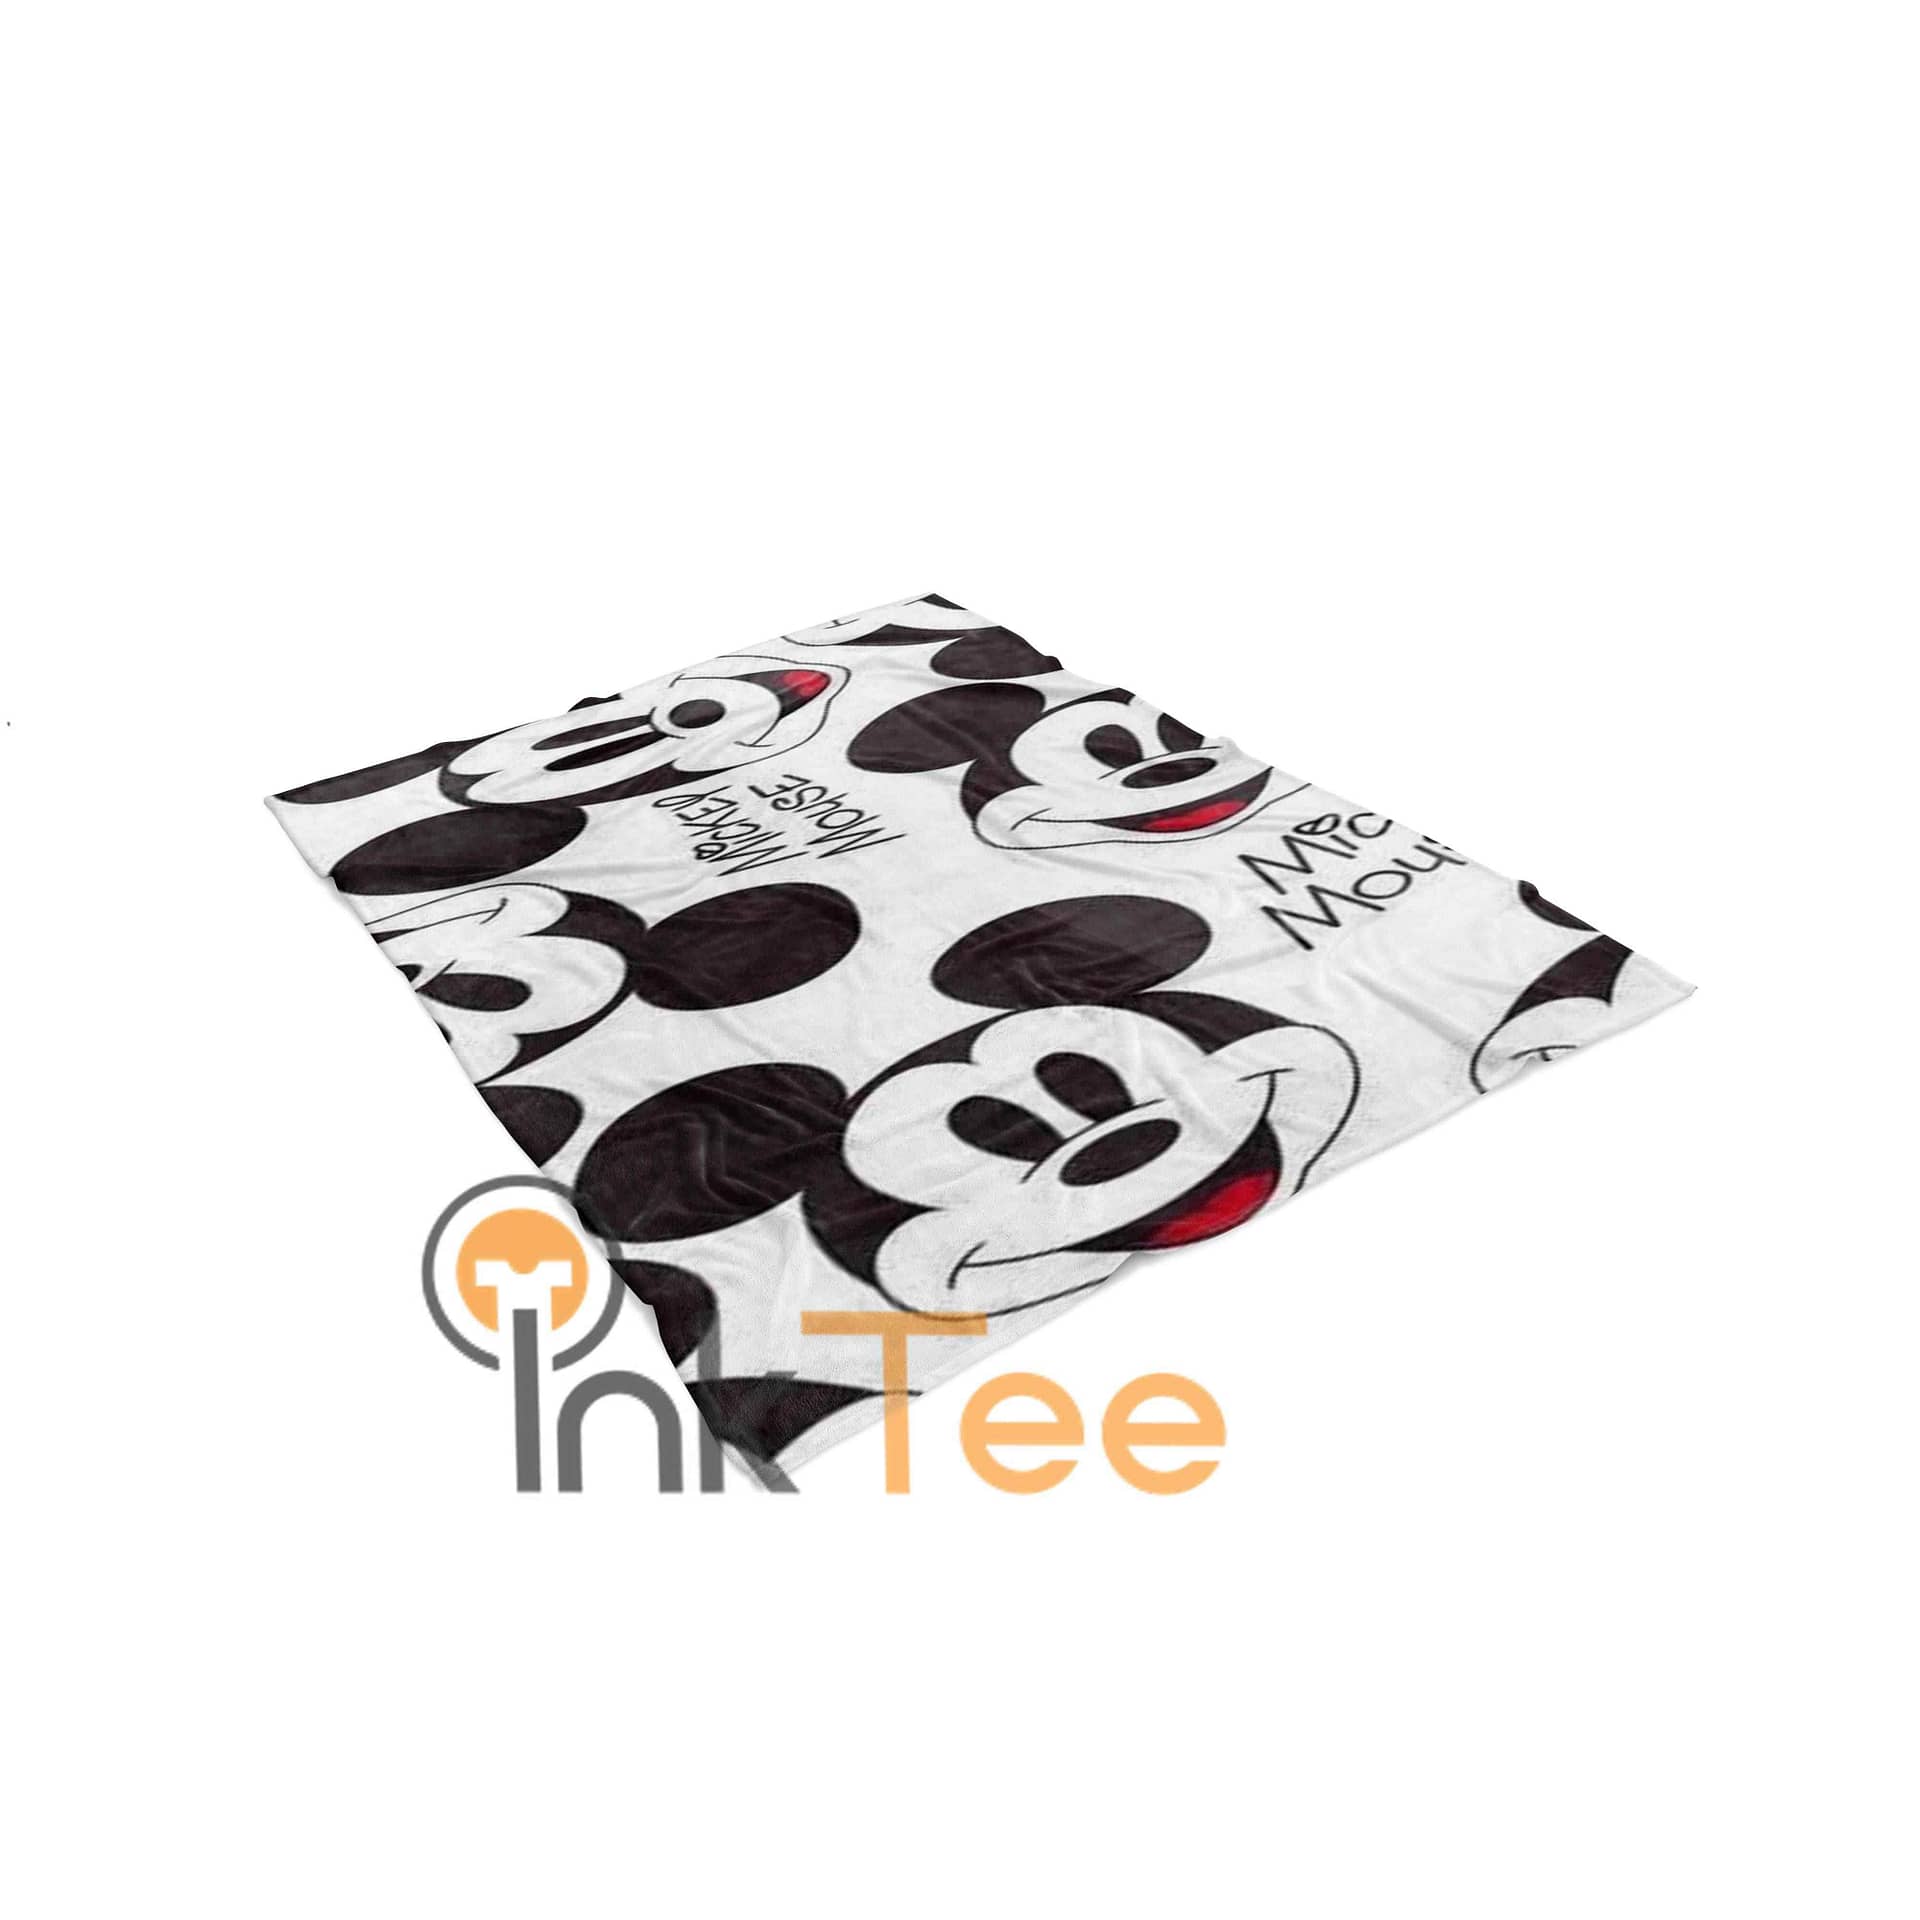 Inktee Store - Mickey Mouse Limited Edition Amazon Best Seller Sku 4086 Fleece Blanket Image